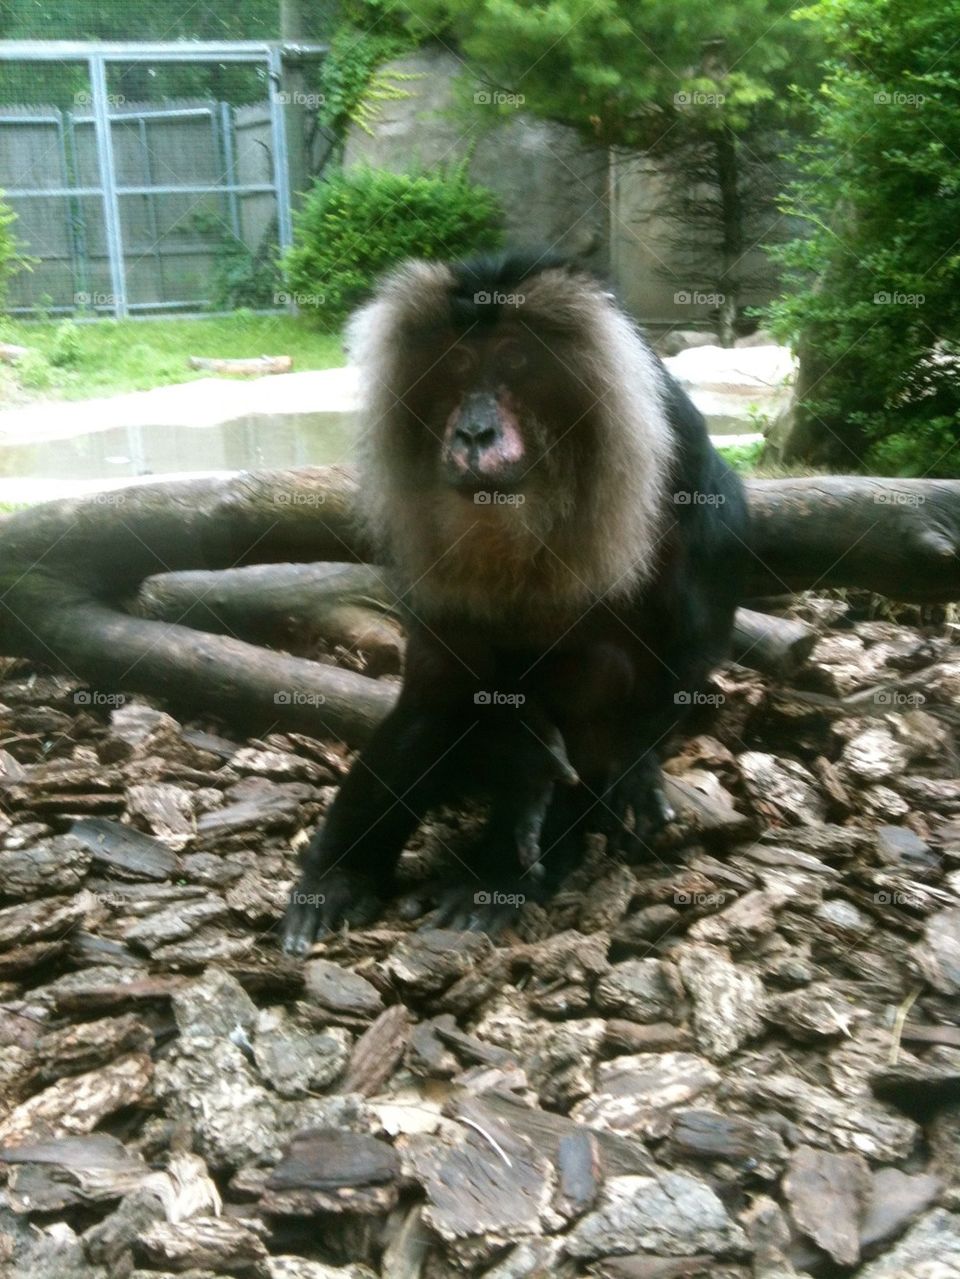 Monkeys at the zoo 